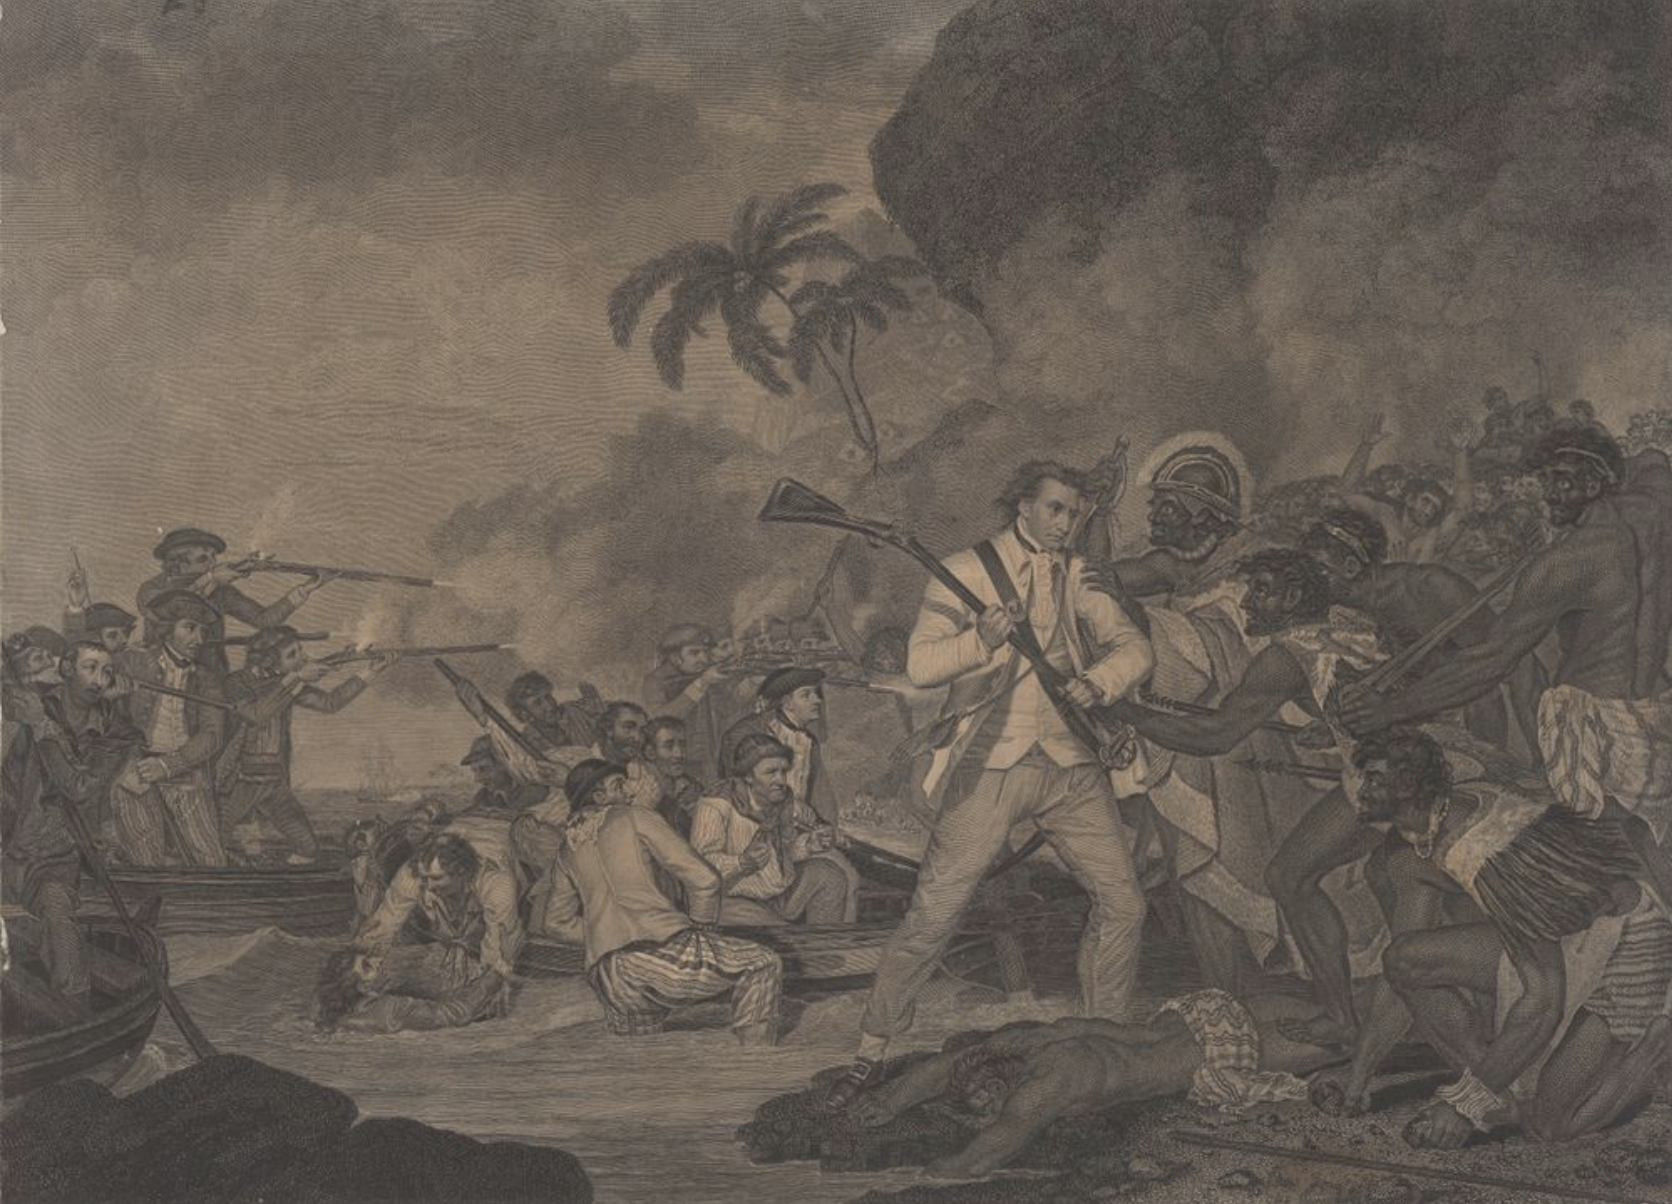 Captain James Cook fighting